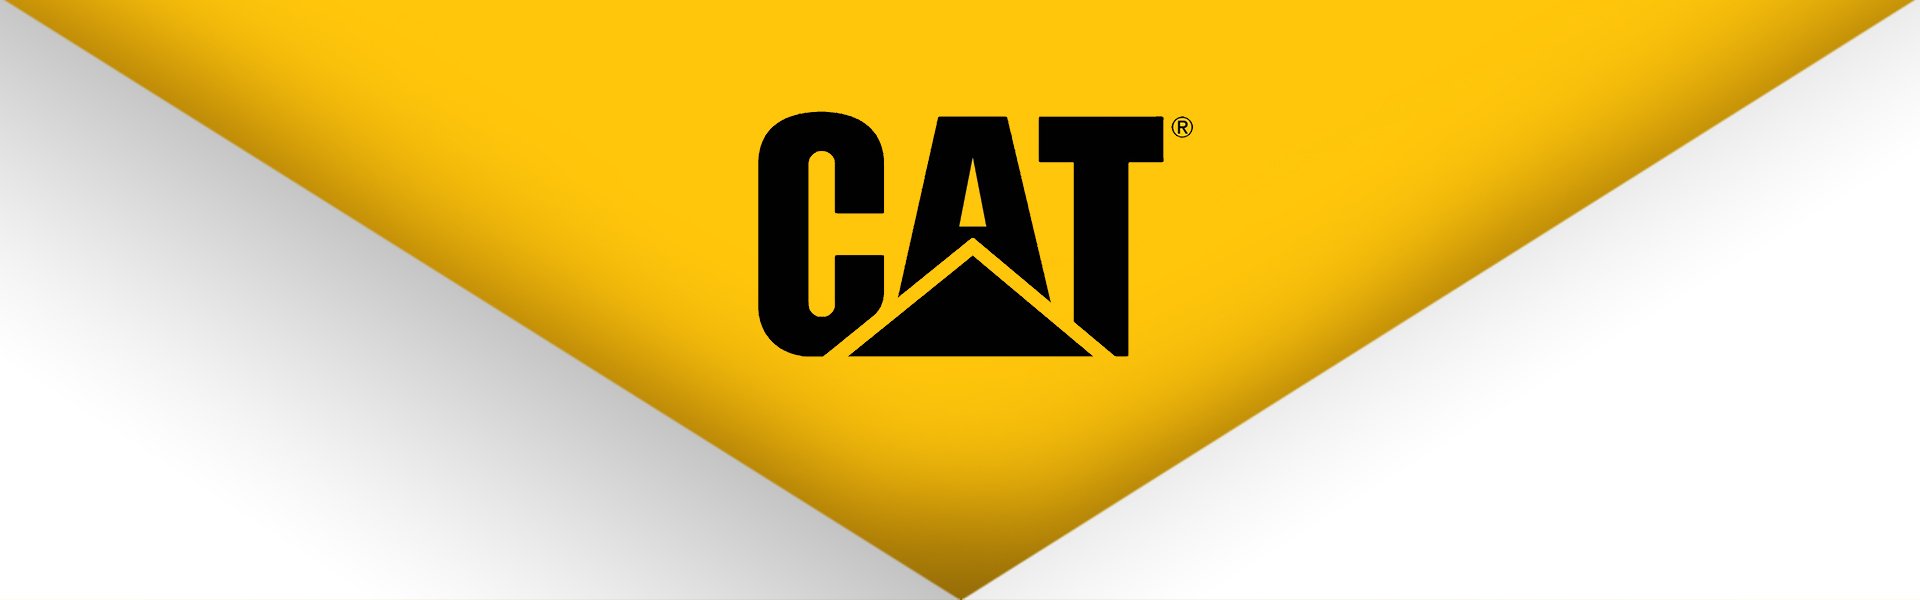 CAT S42 H+, Dual SIM, Black Caterpillar 